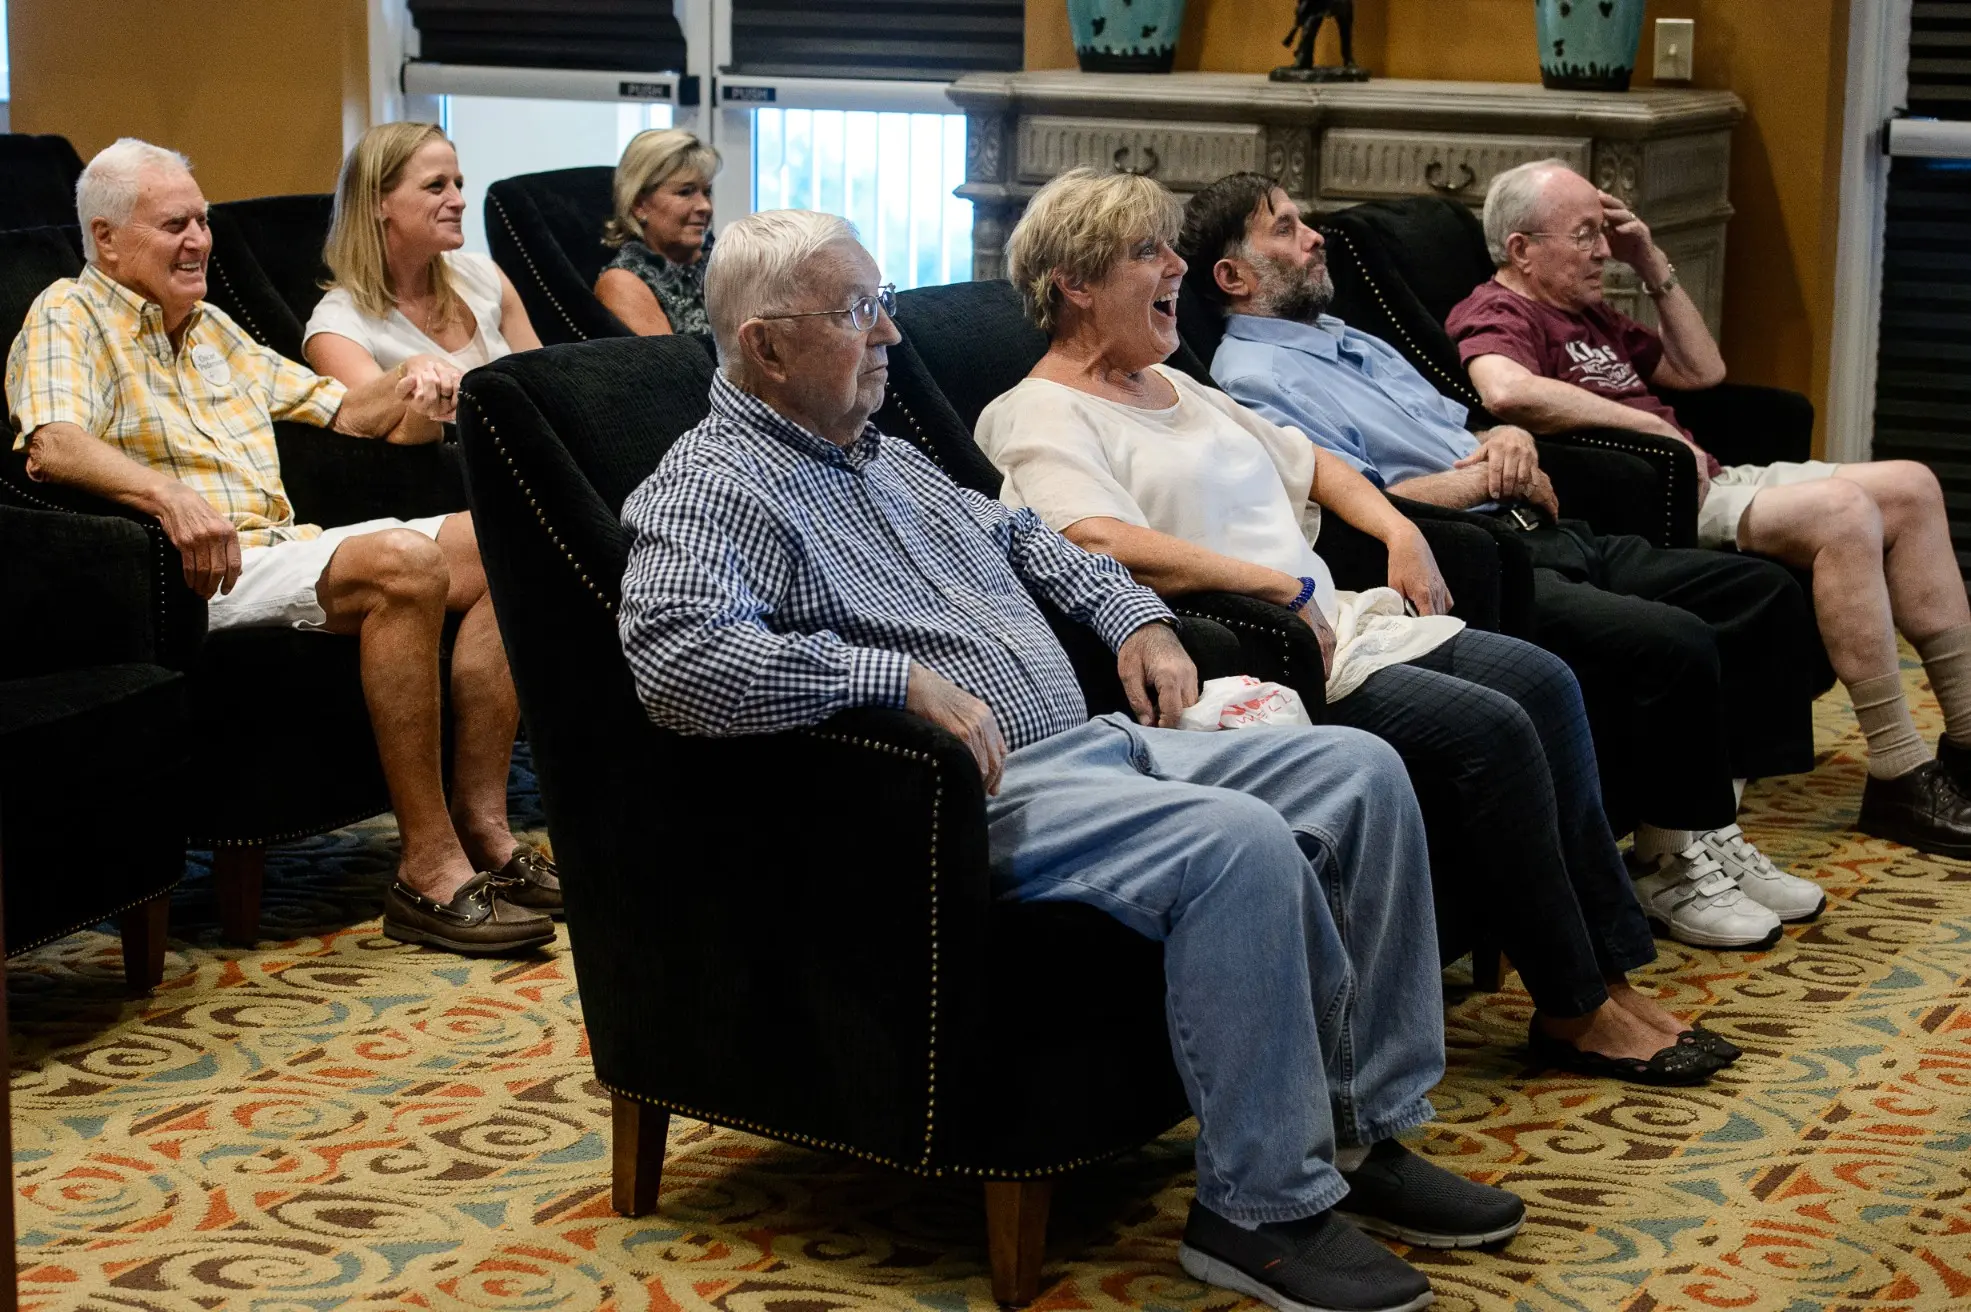 Seniors in the theatre of a senior living community in Niceville, FL